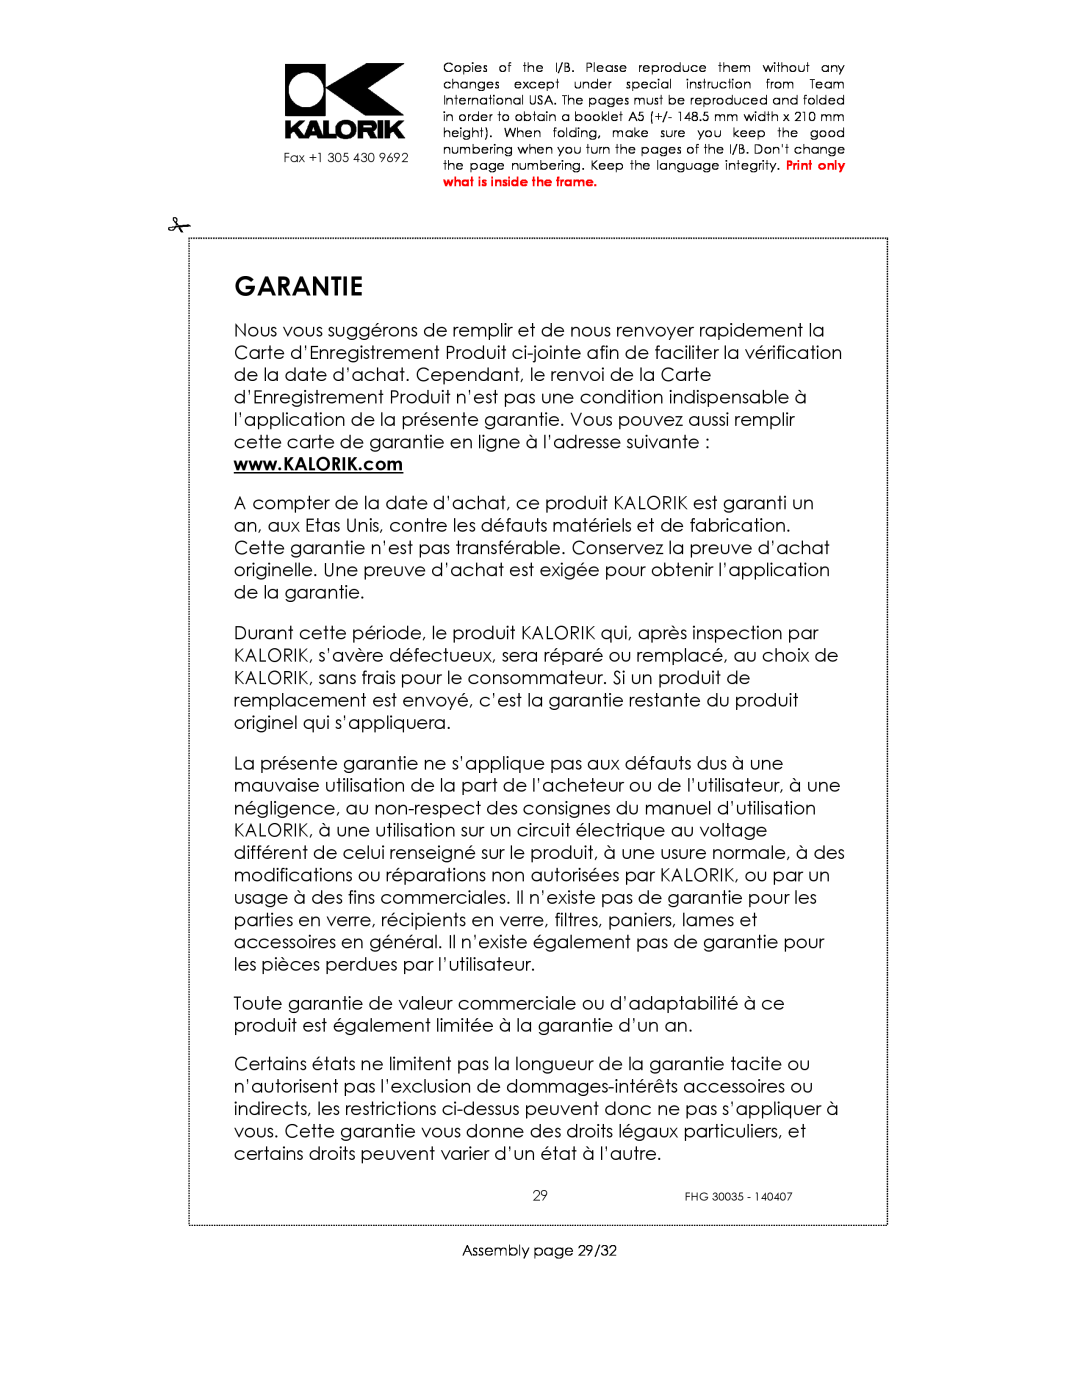 Kalorik FHG 30035 manual Garantie, Assembly page 29/32 